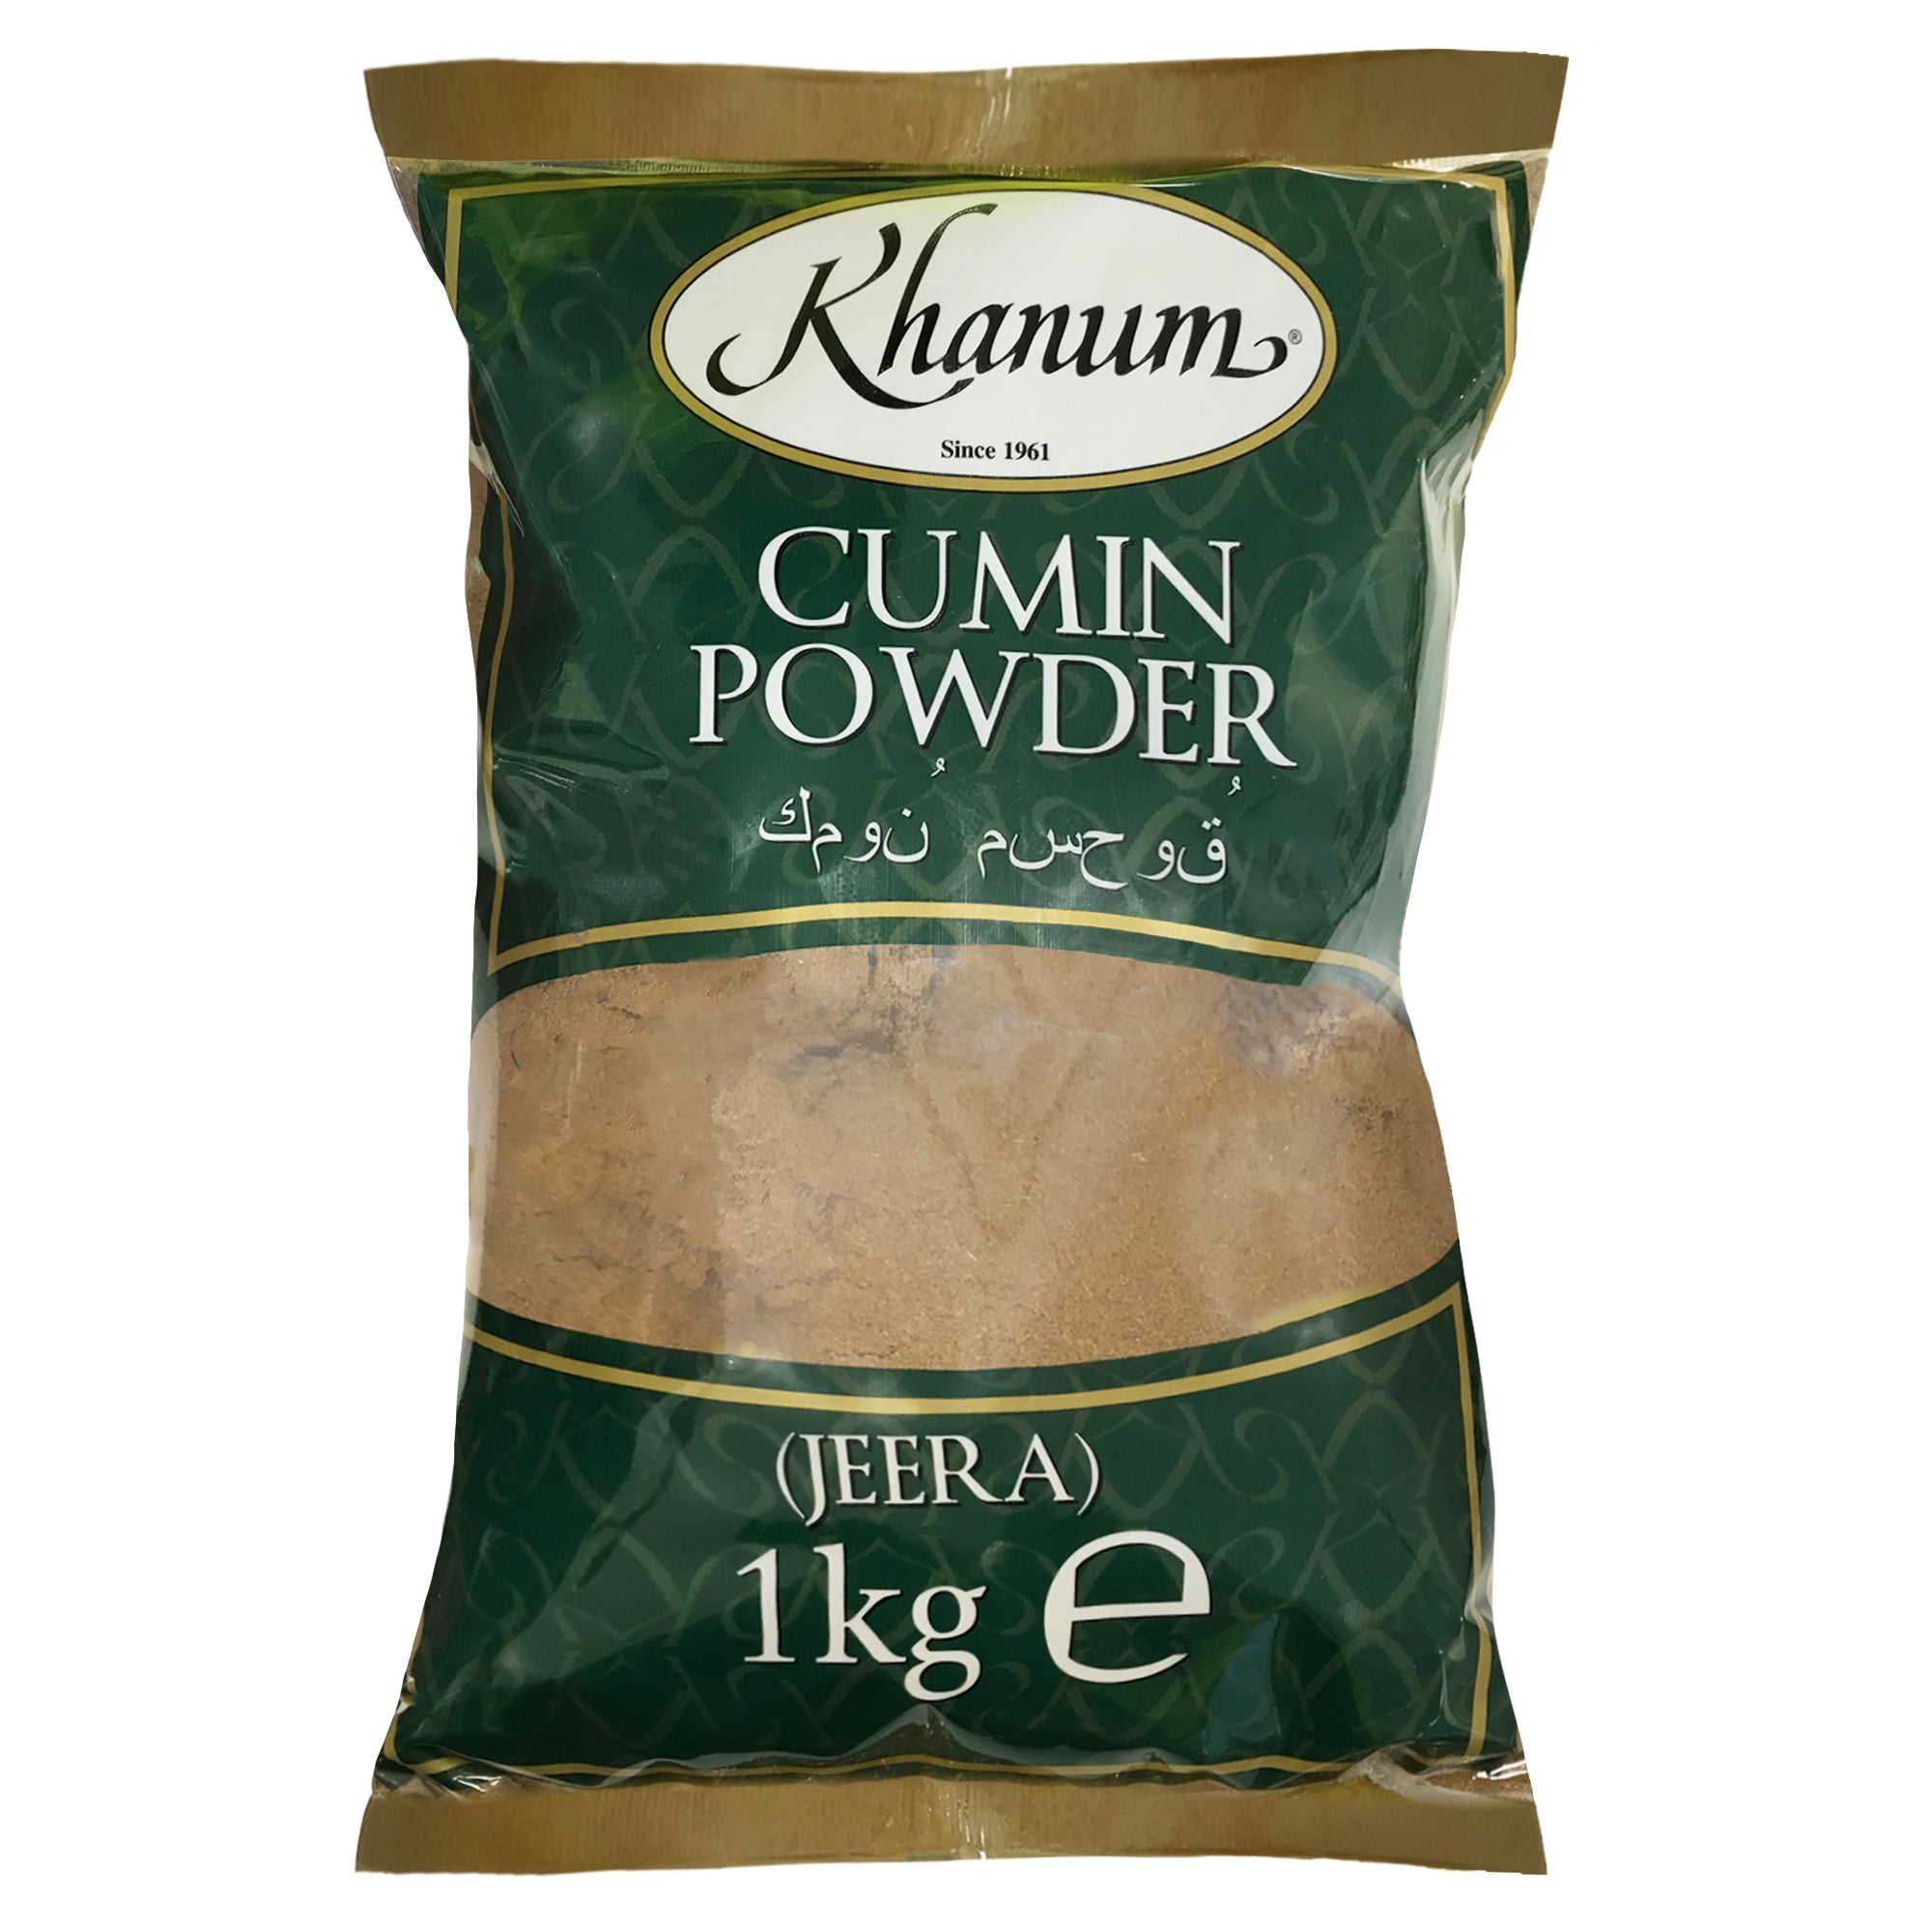 Khanum Cumin Powder (Jeera)6x1kg